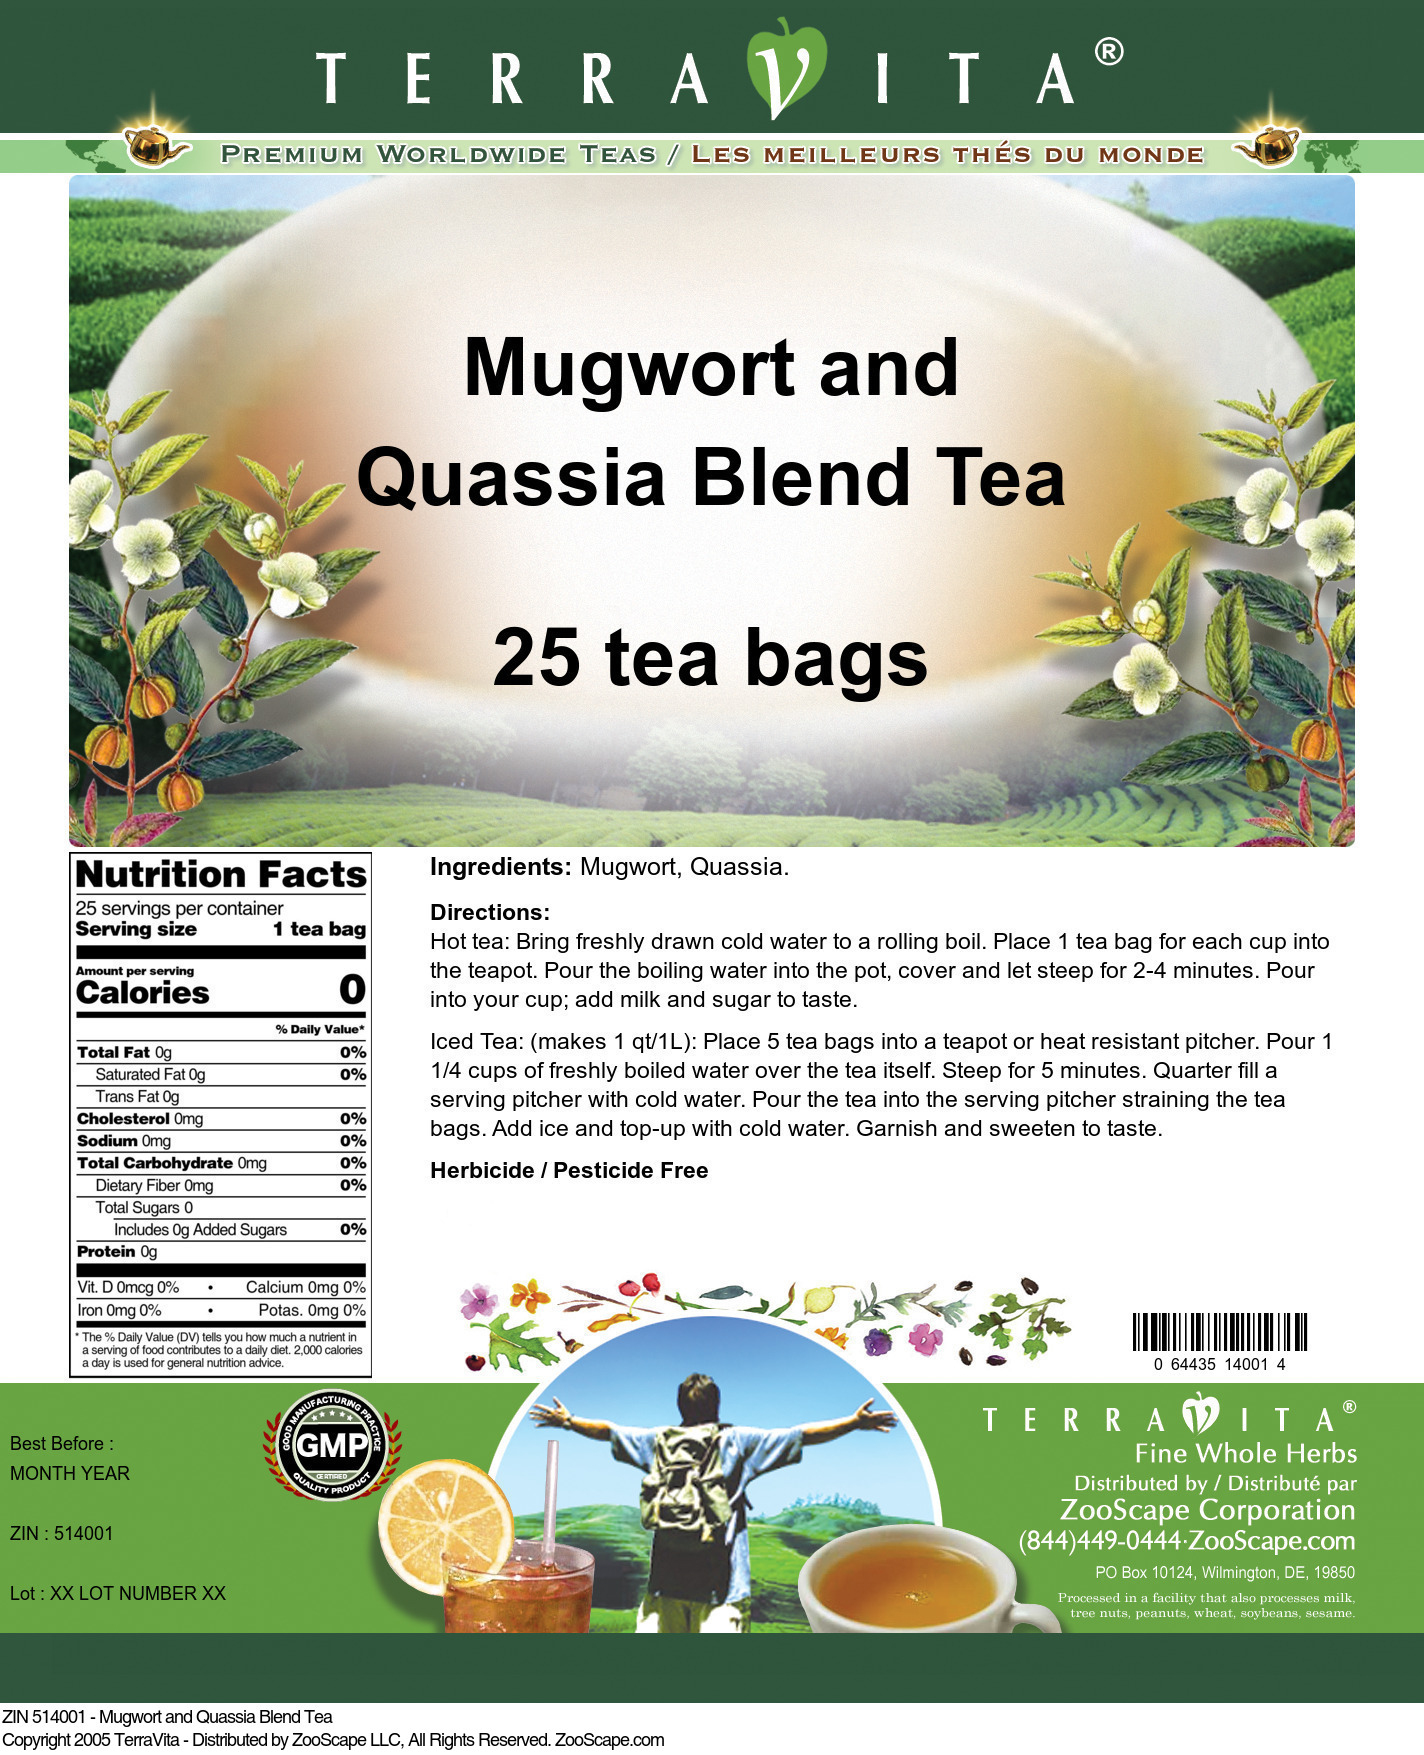 Mugwort and Quassia Blend Tea - Label